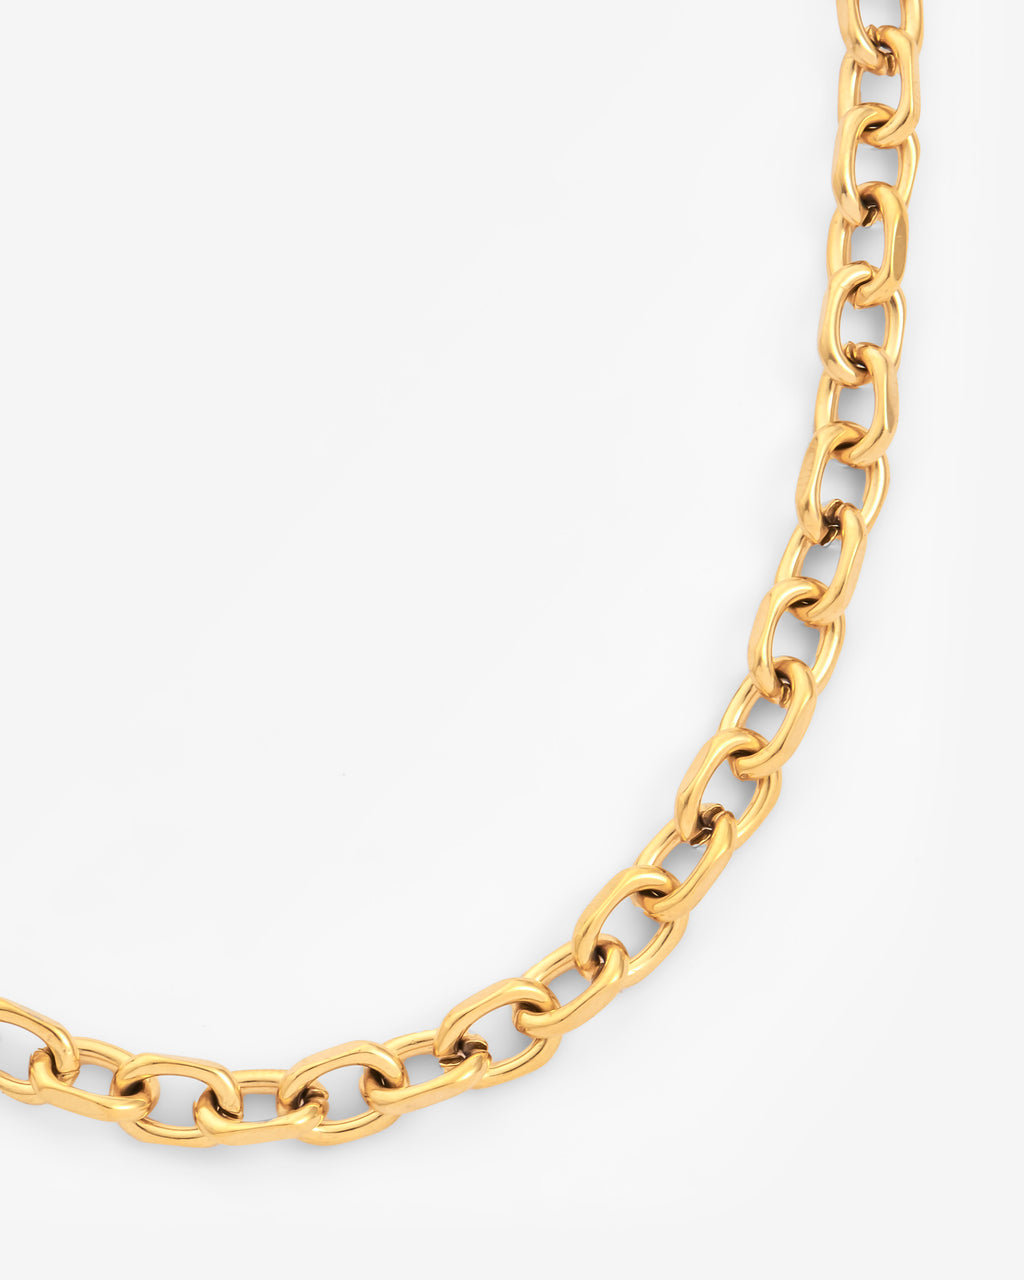 7mm Hermes Link Chain - Gold – Cernucci